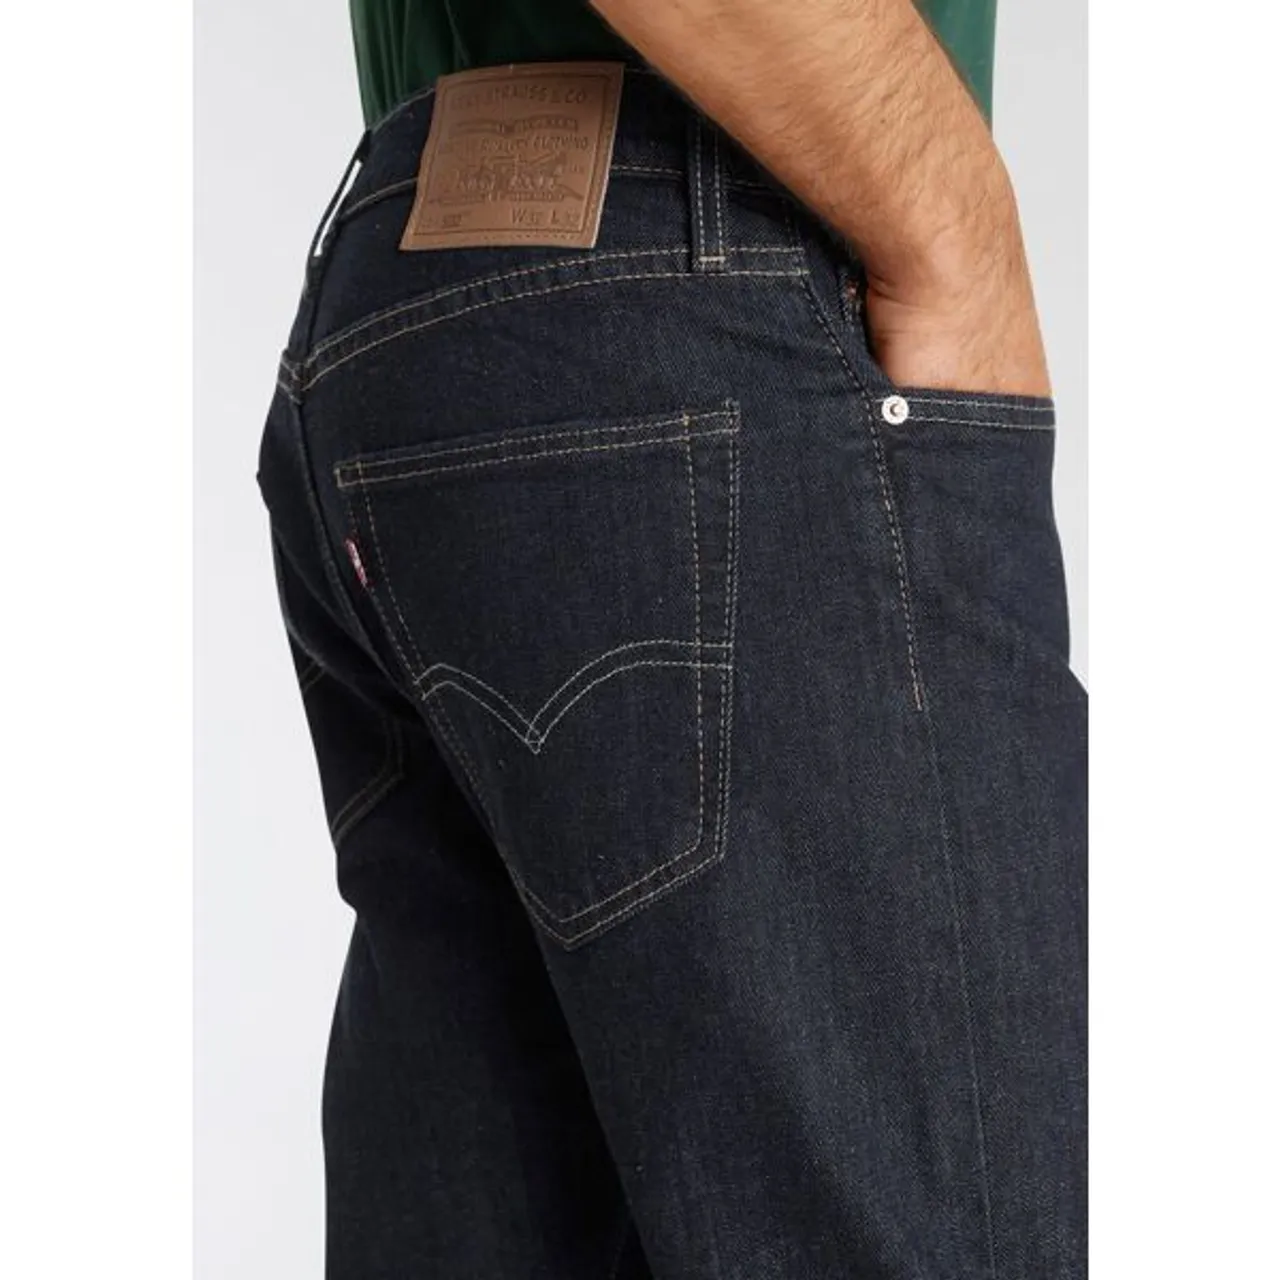 Tapered-fit-Jeans LEVI'S "502 TAPER" Gr. 34, Länge 36, blau (dark indigo) Herren Jeans Tapered-Jeans Bestseller